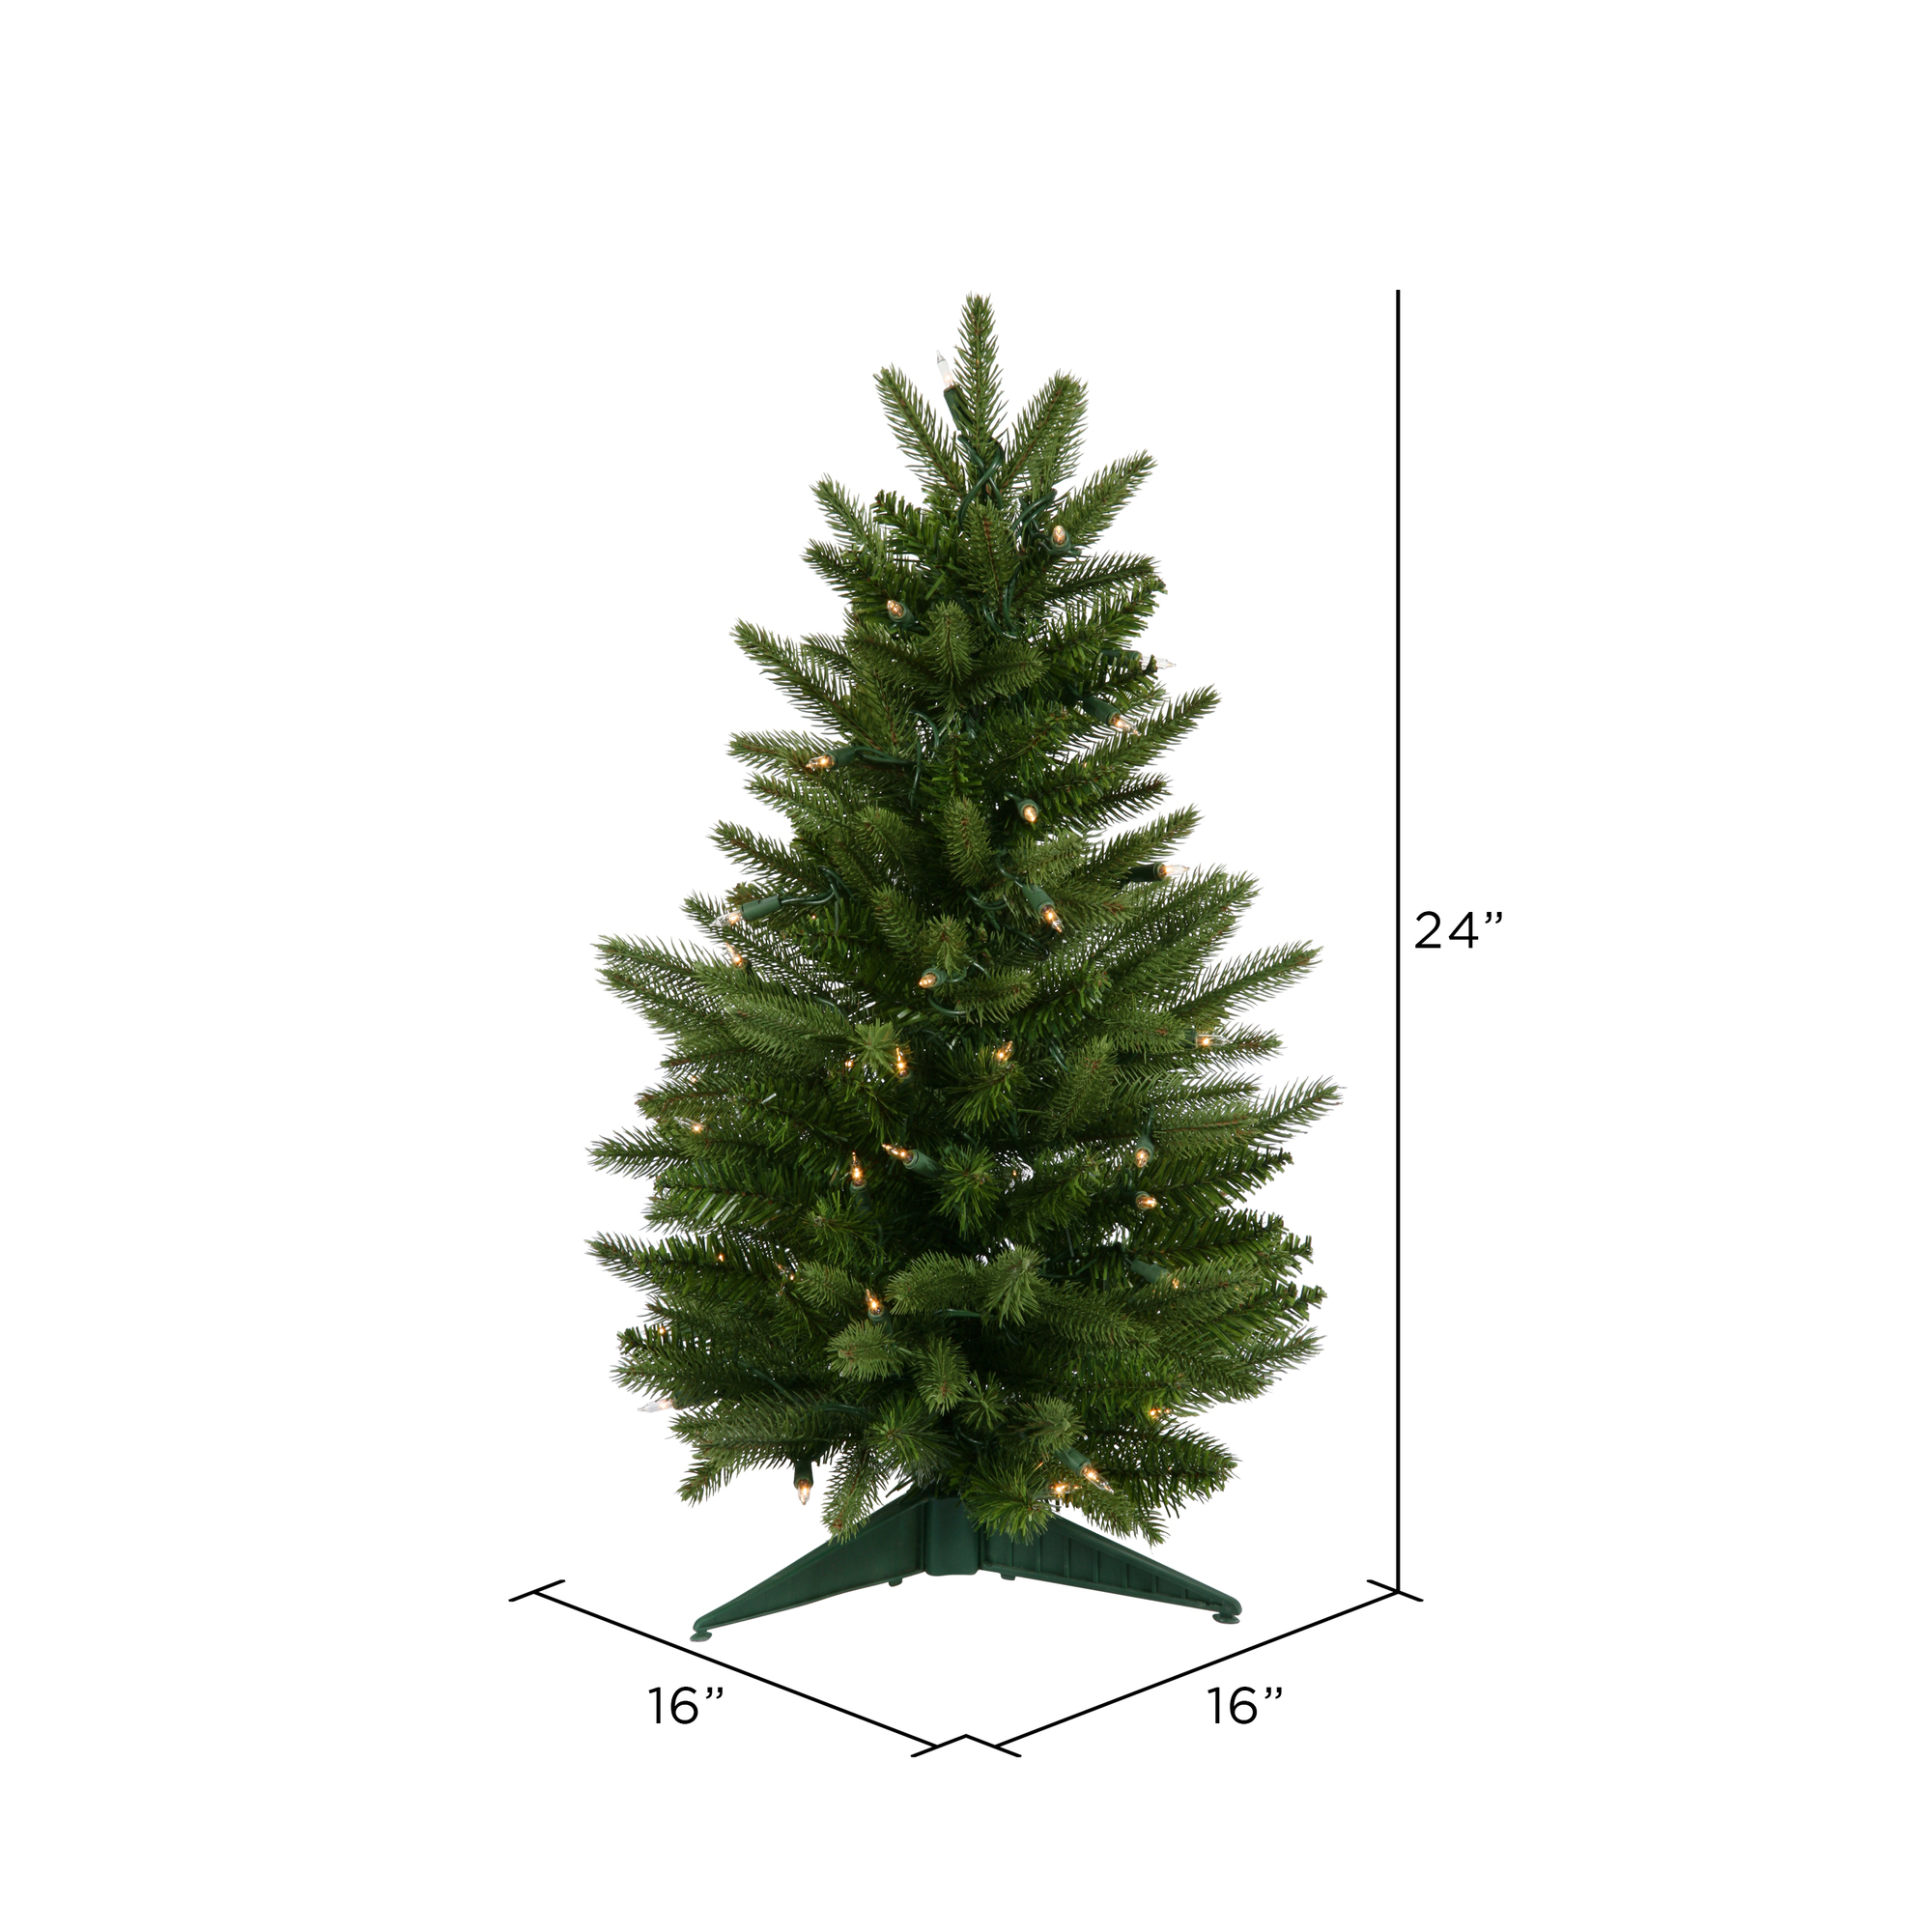 Vickerman 24" Fraser Fir Artificial Christmas Tree, Clear Dura-lit Lights - image 2 of 4